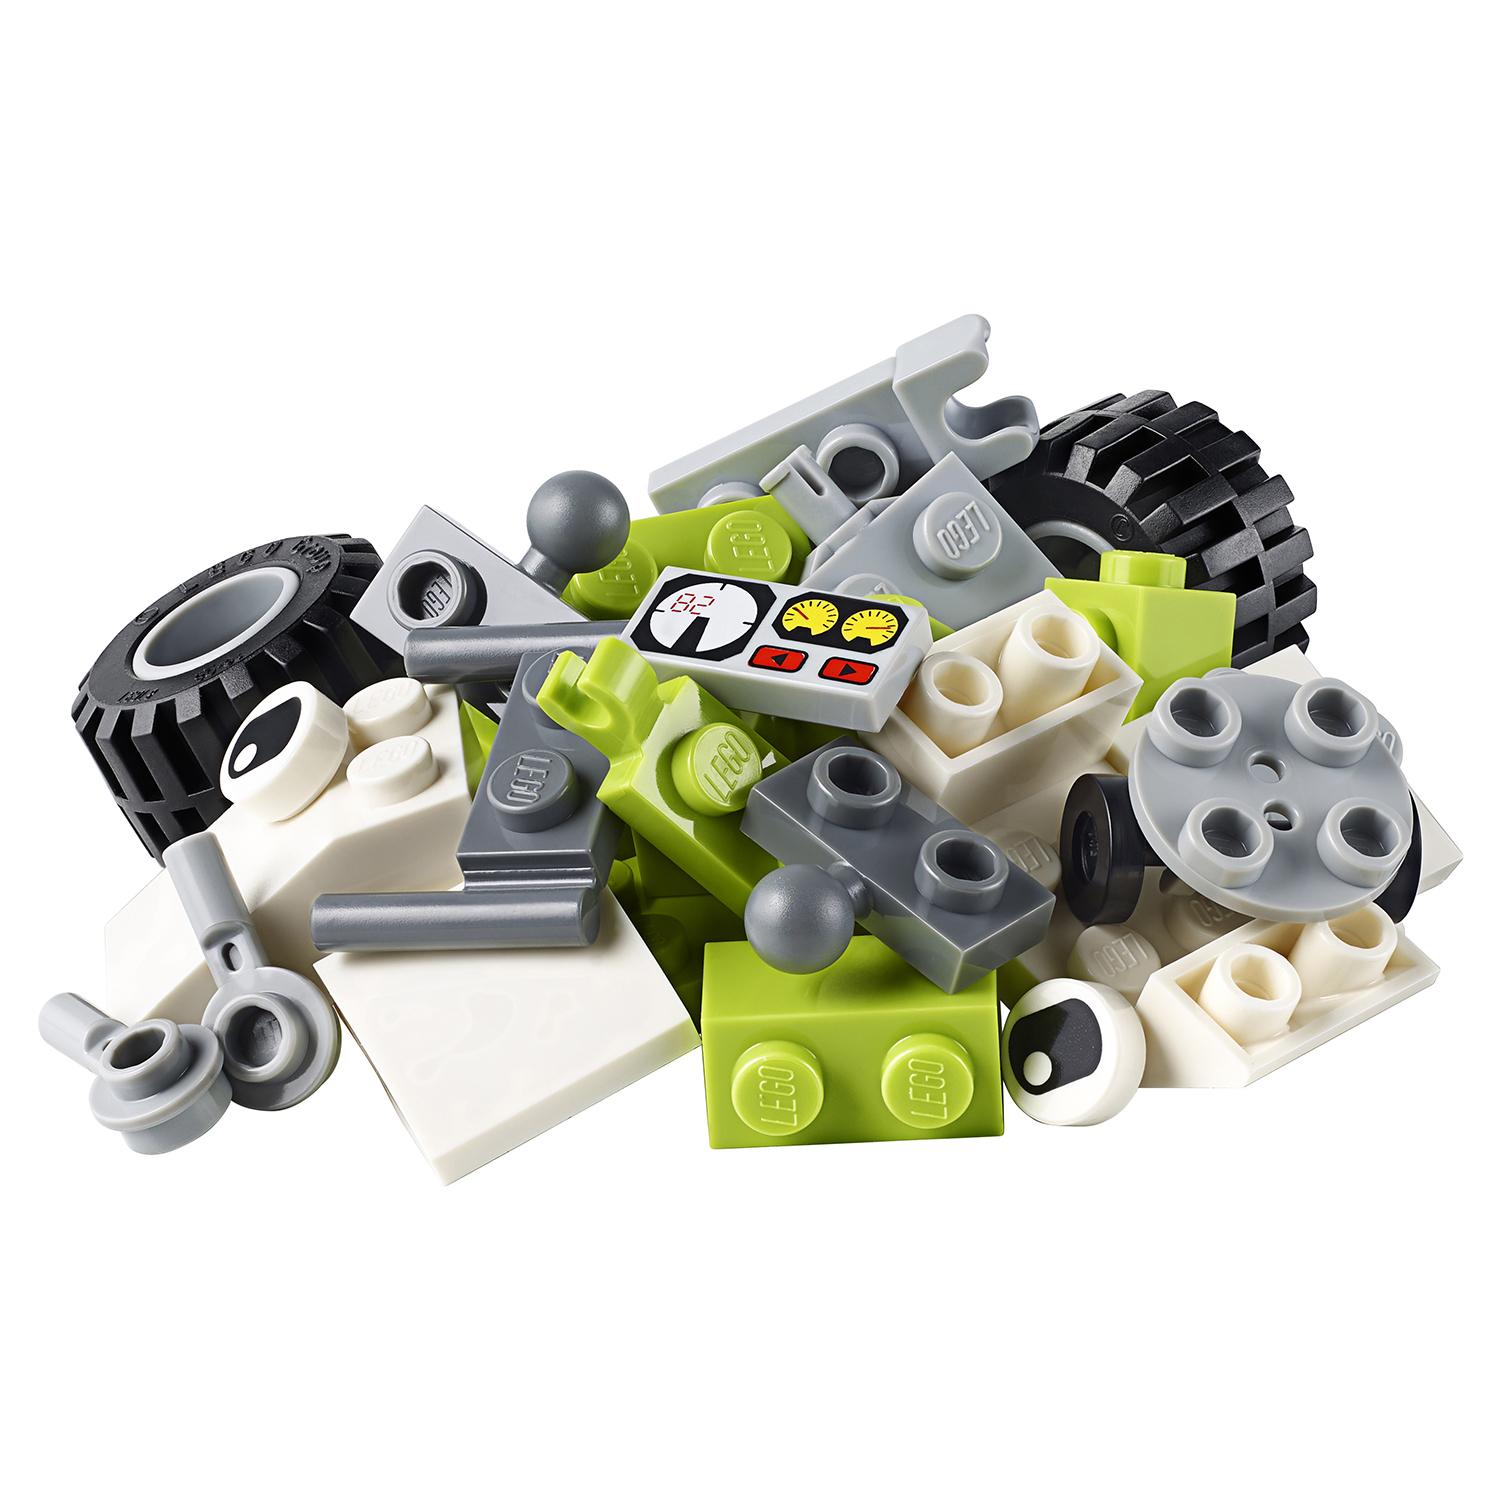 Конструктор LEGO Classic - Кубики и глазки